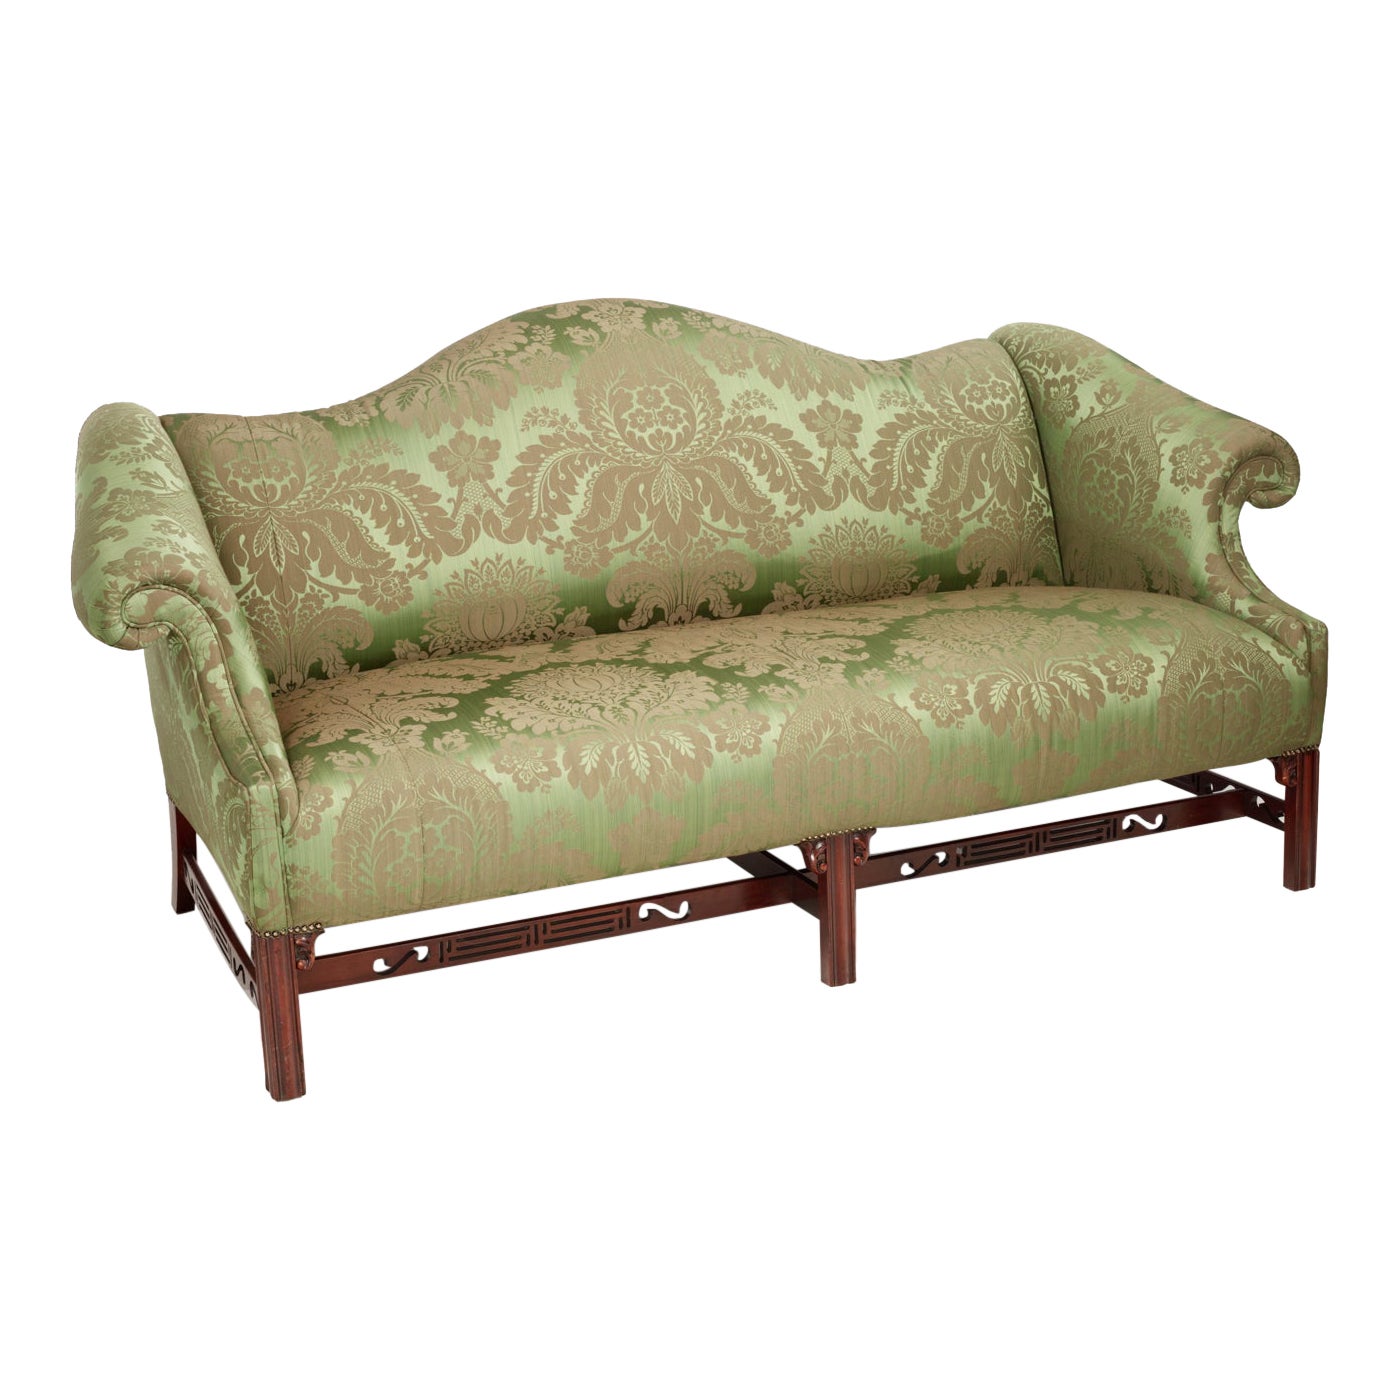 Early 19th Century George III Gainsborough Sofa For Sale